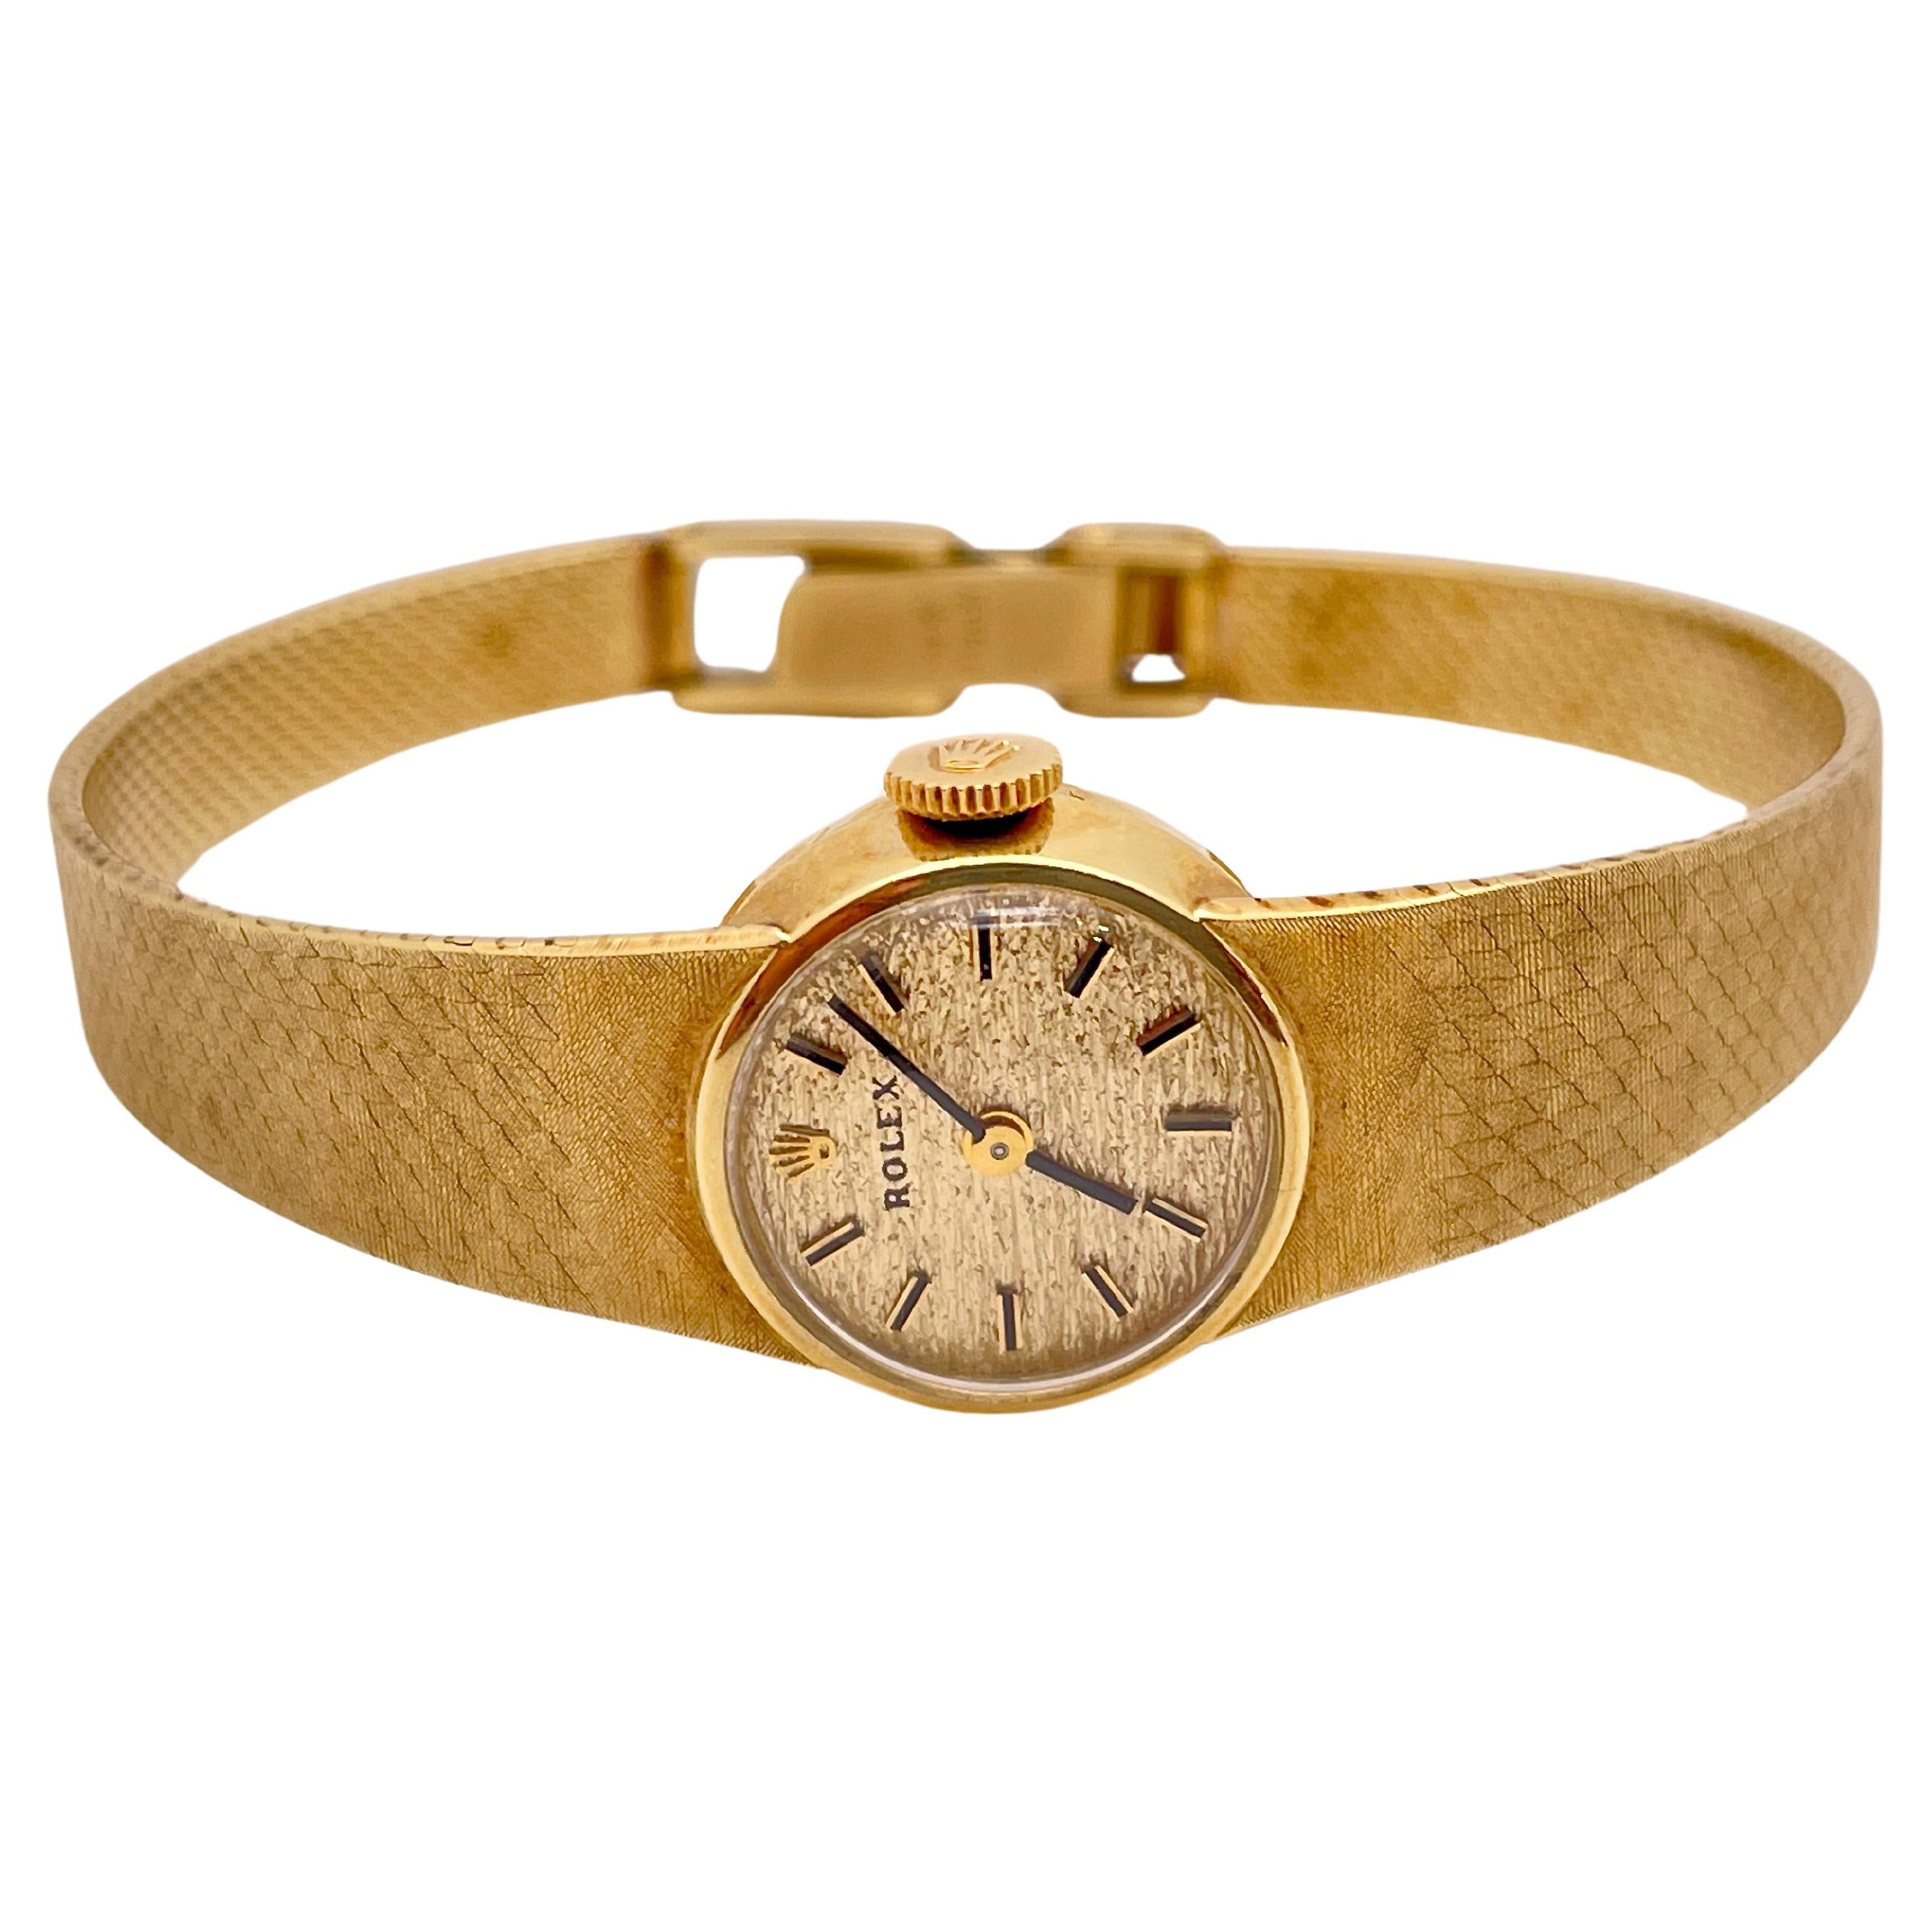 Rolex Women's Winding Watch 14K Yellow Gold